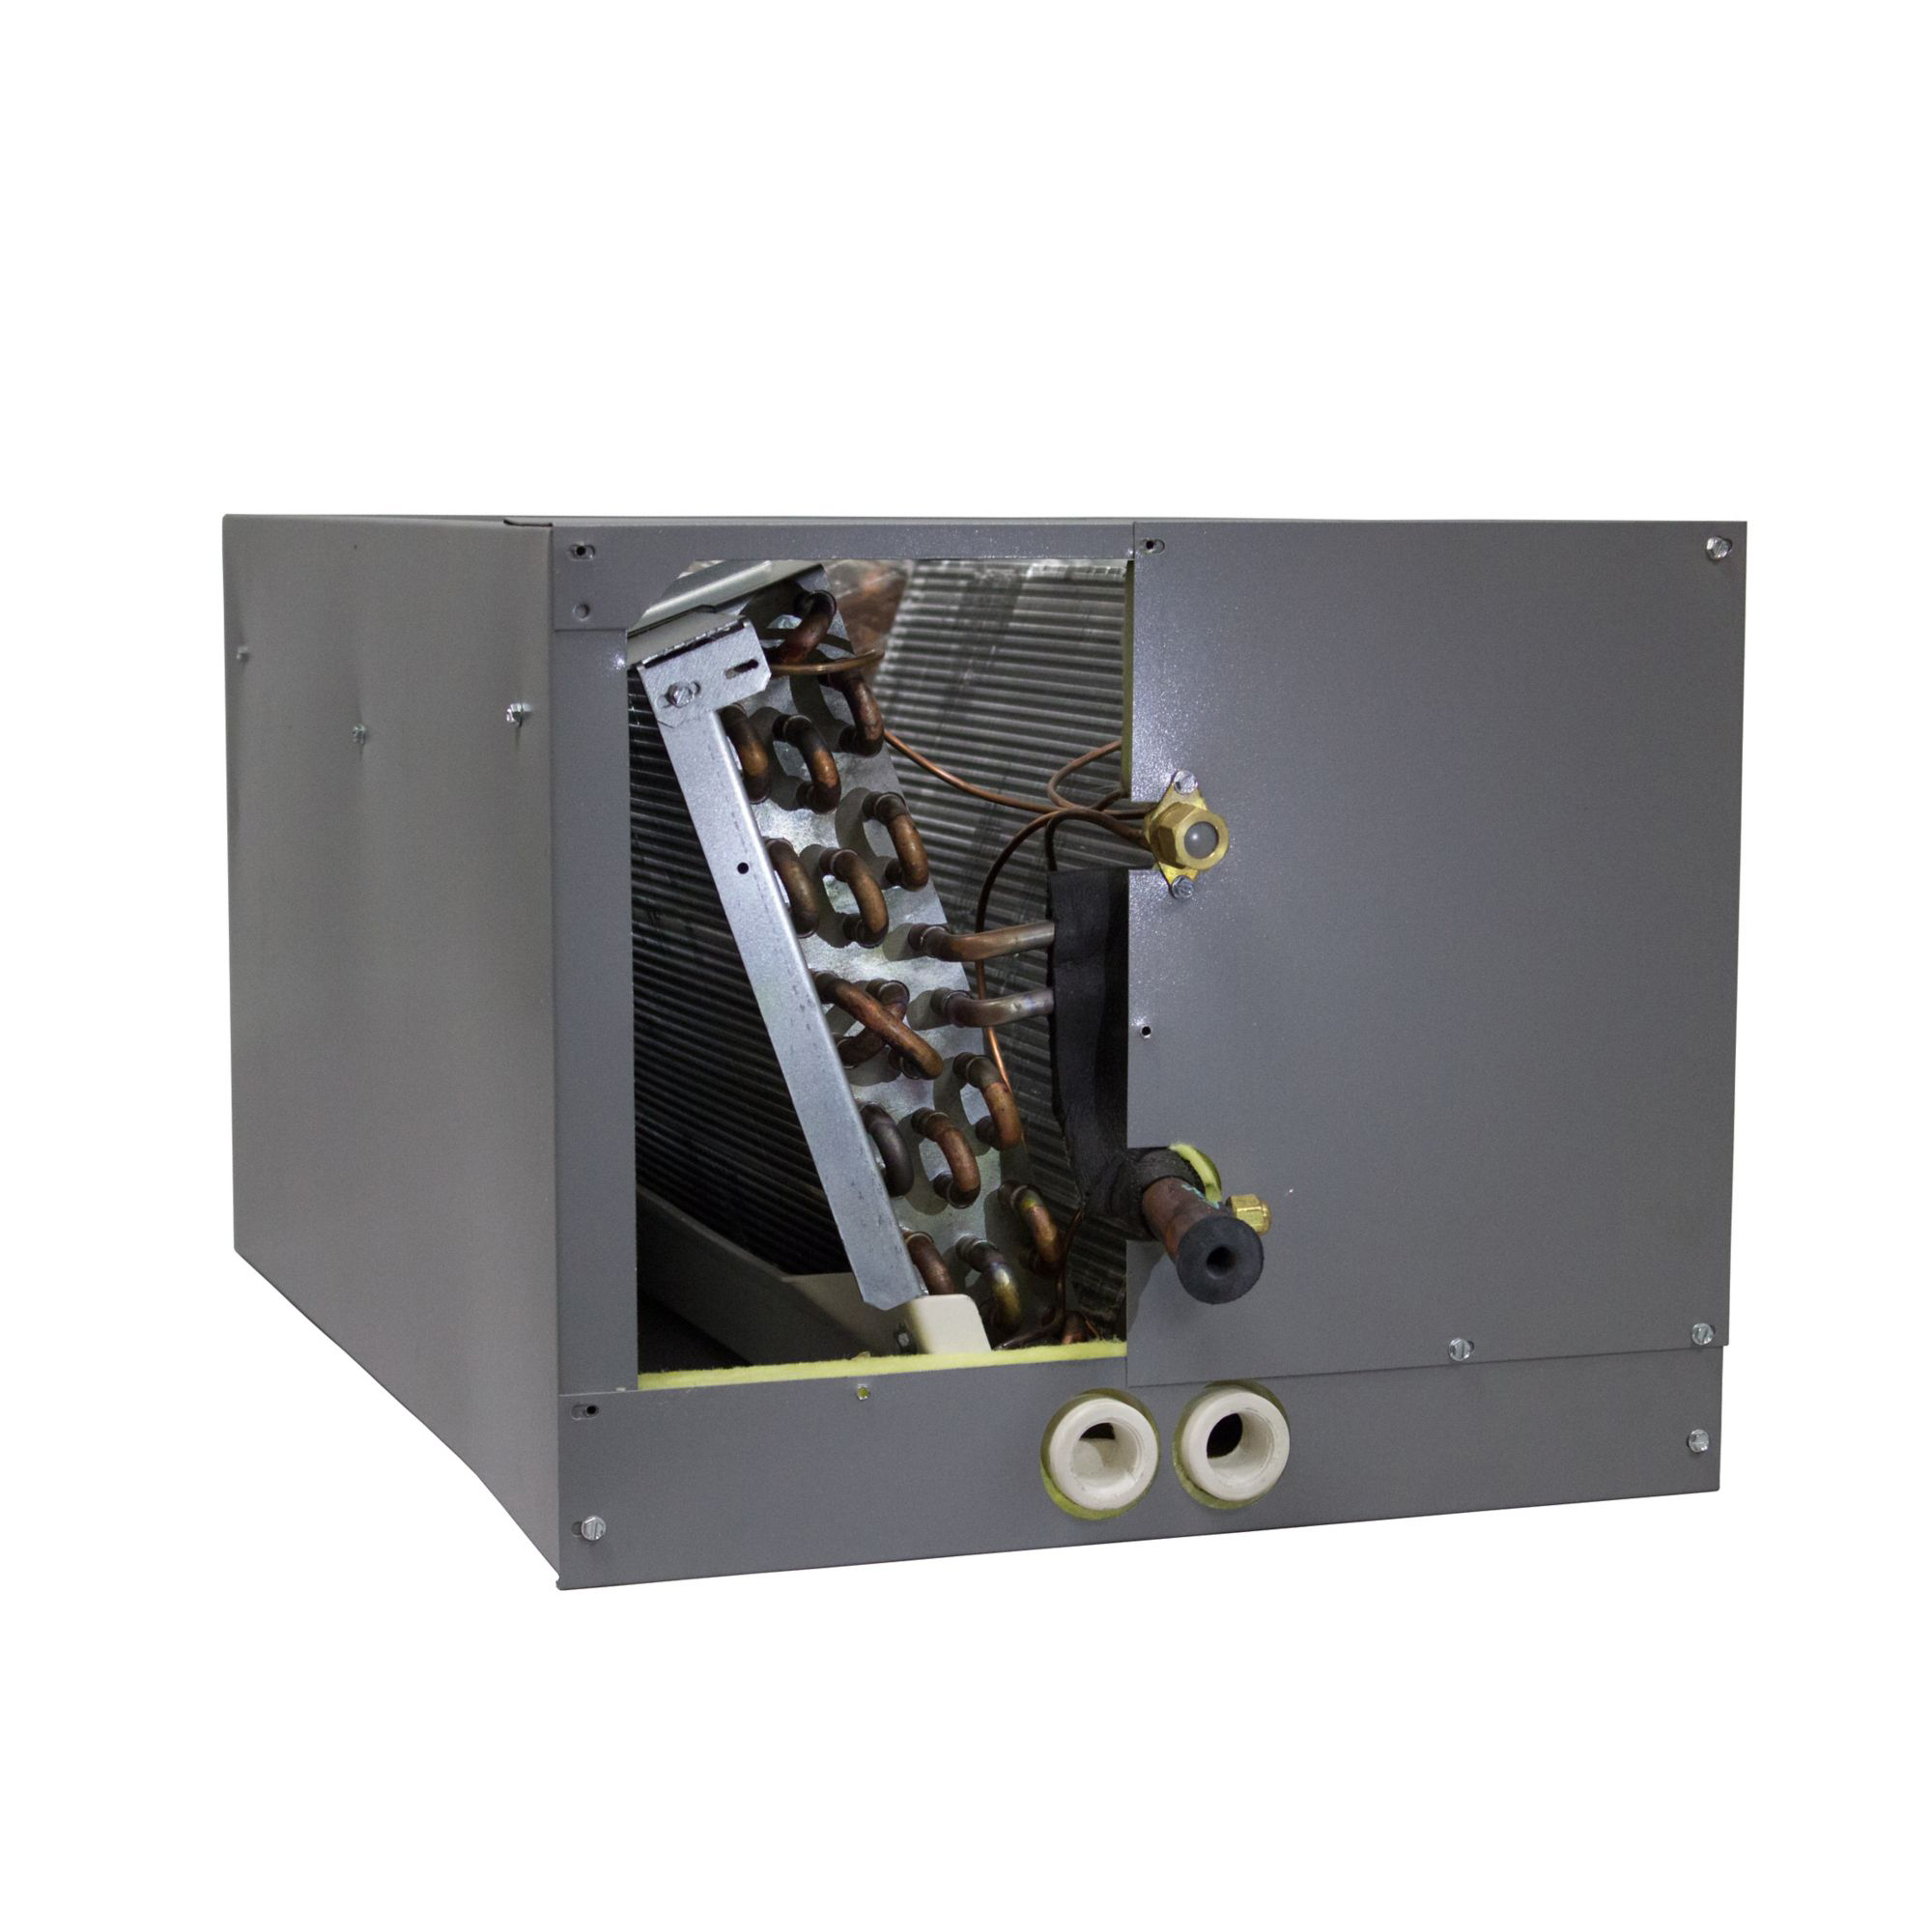 Allied™ 1.911479 1 Series Evaporator Coil, 2 ton Nominal, Downflow Air Flow, Cased Enclosure, R-22/R-410A Refrigerant